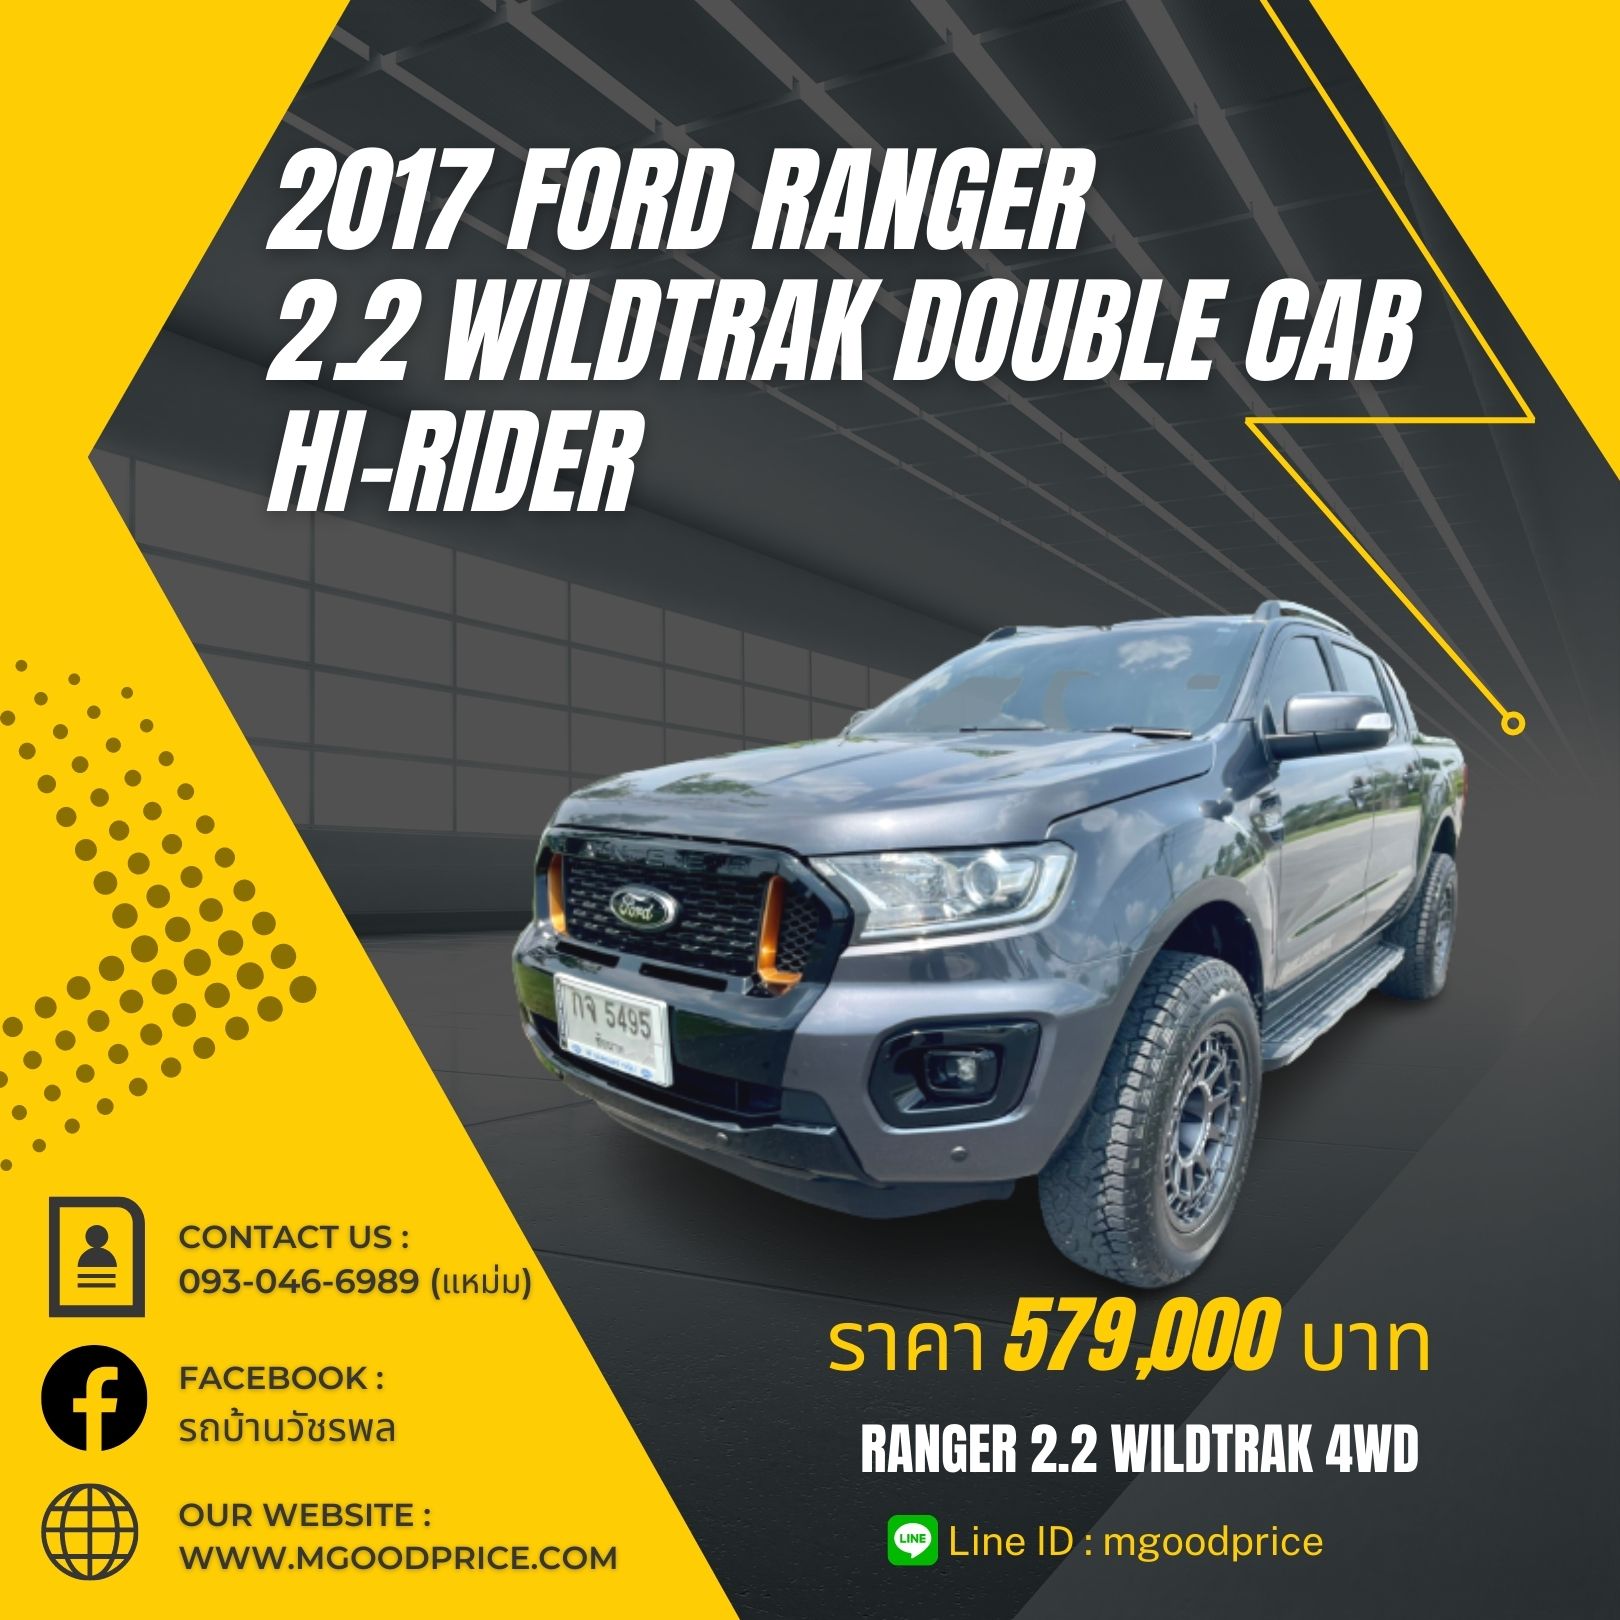 2017 FORD RANGER, 2.2 WILDTRAK DOUBLE CAB HI-RIDER โฉม HI-RIDER DOUBLE CAB